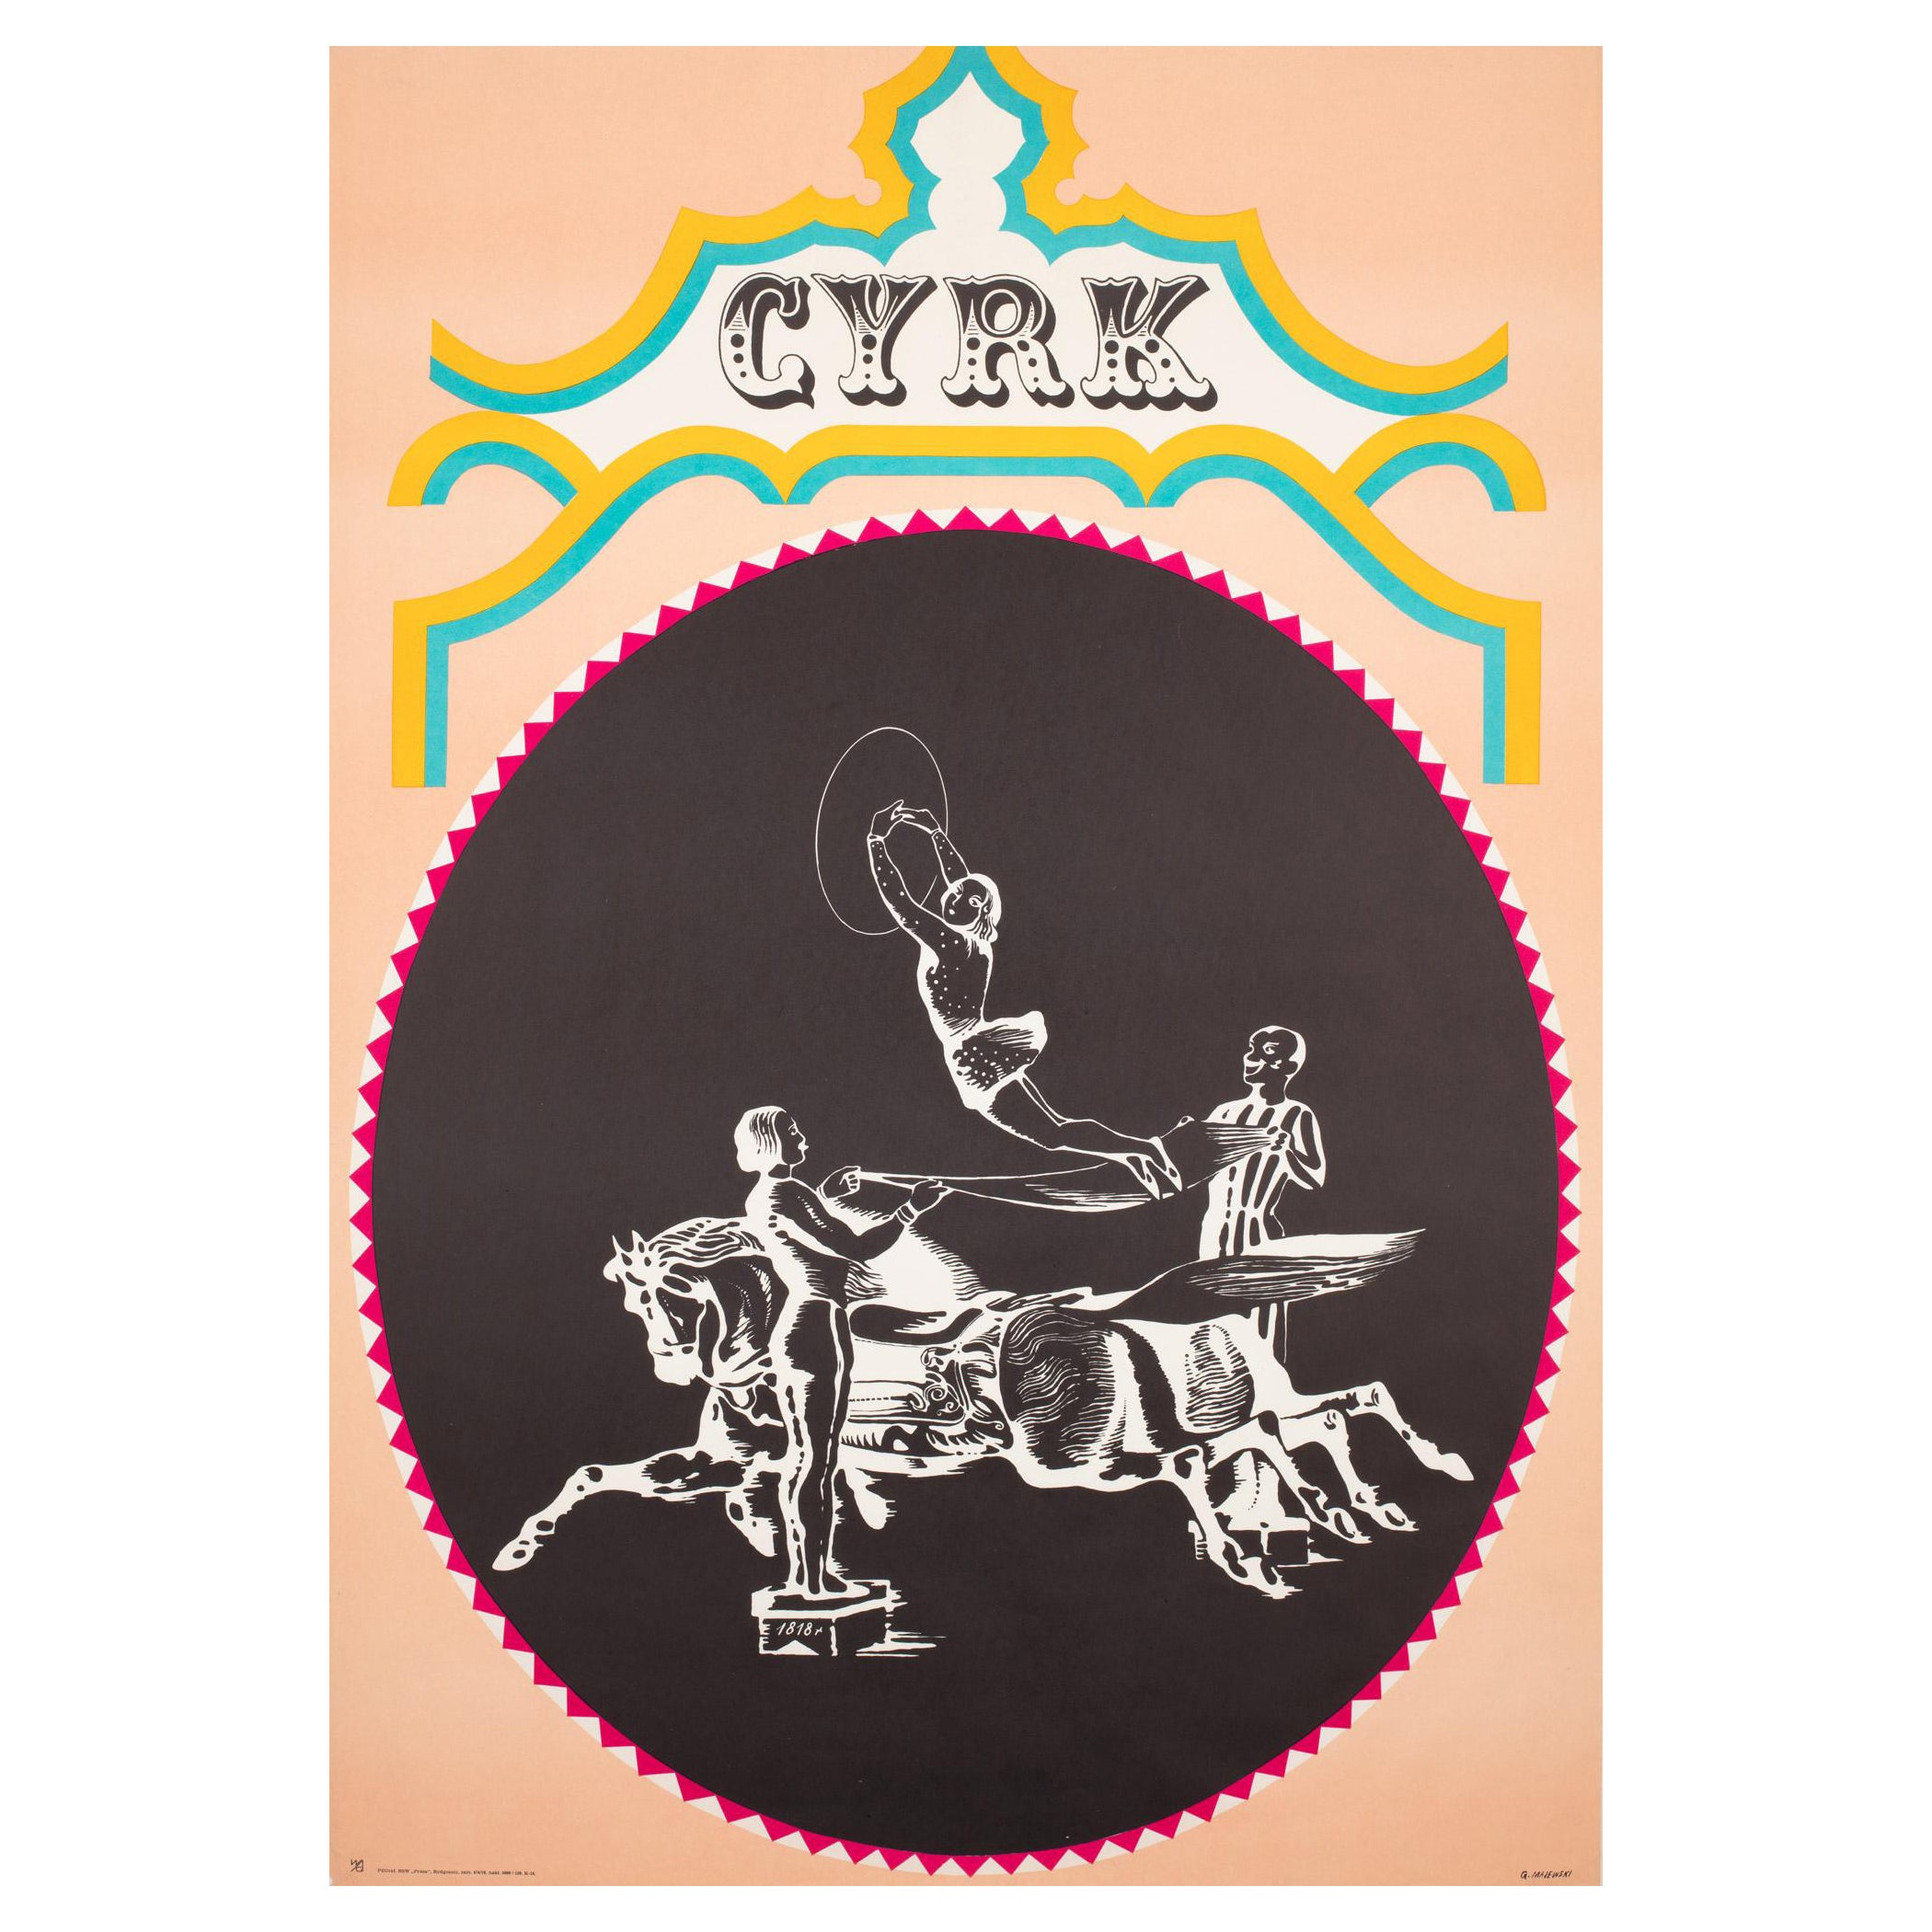 Cyrk Performing on Horseback 1970 Polish Circus Poster, Majewski